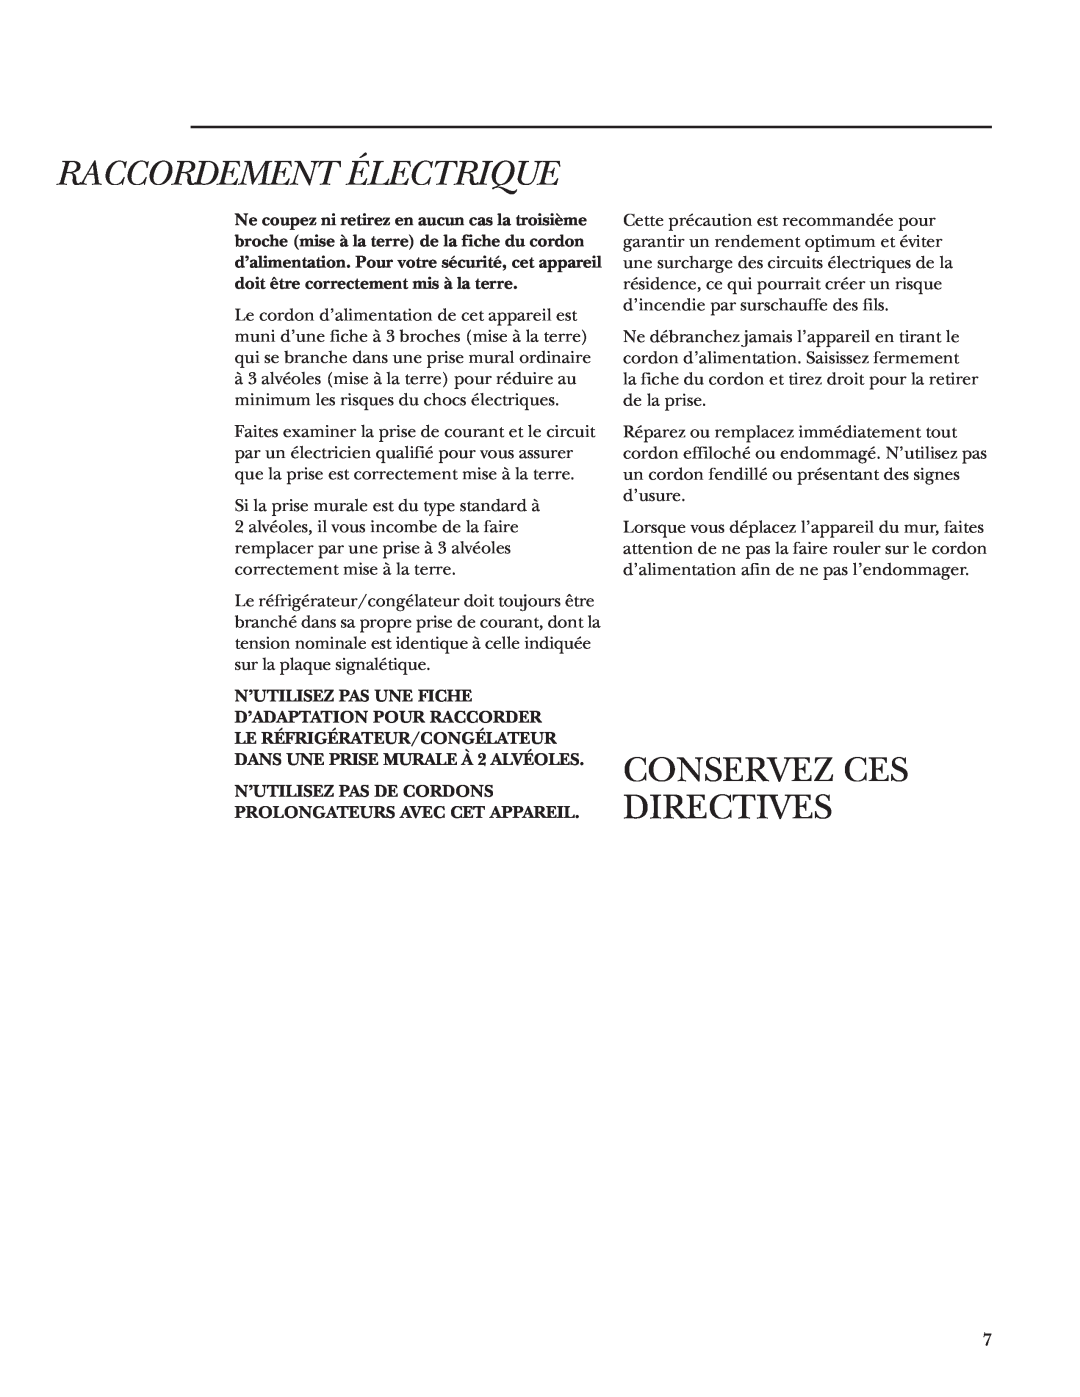 GE Monogram Single Door Refrigerator/Freezer, ZIRS36NMRH owner manual Raccordement Électrique, Conservez Ces Directives 